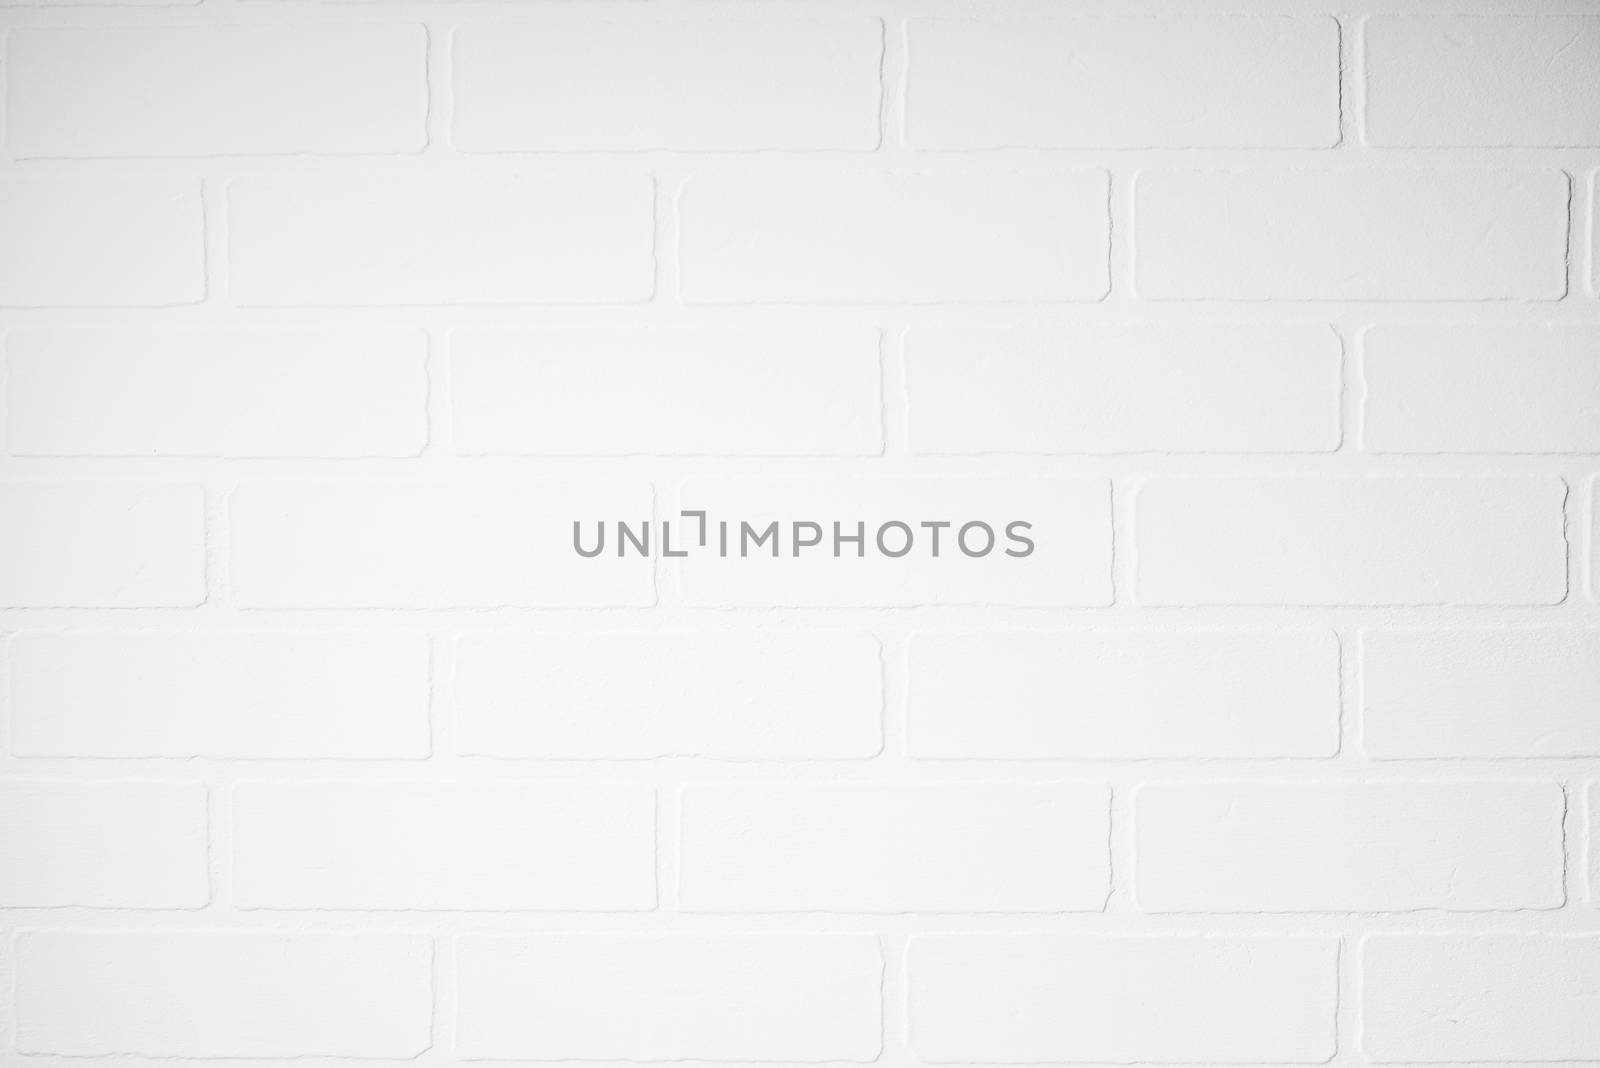 closeup white brick wall in photo studio background